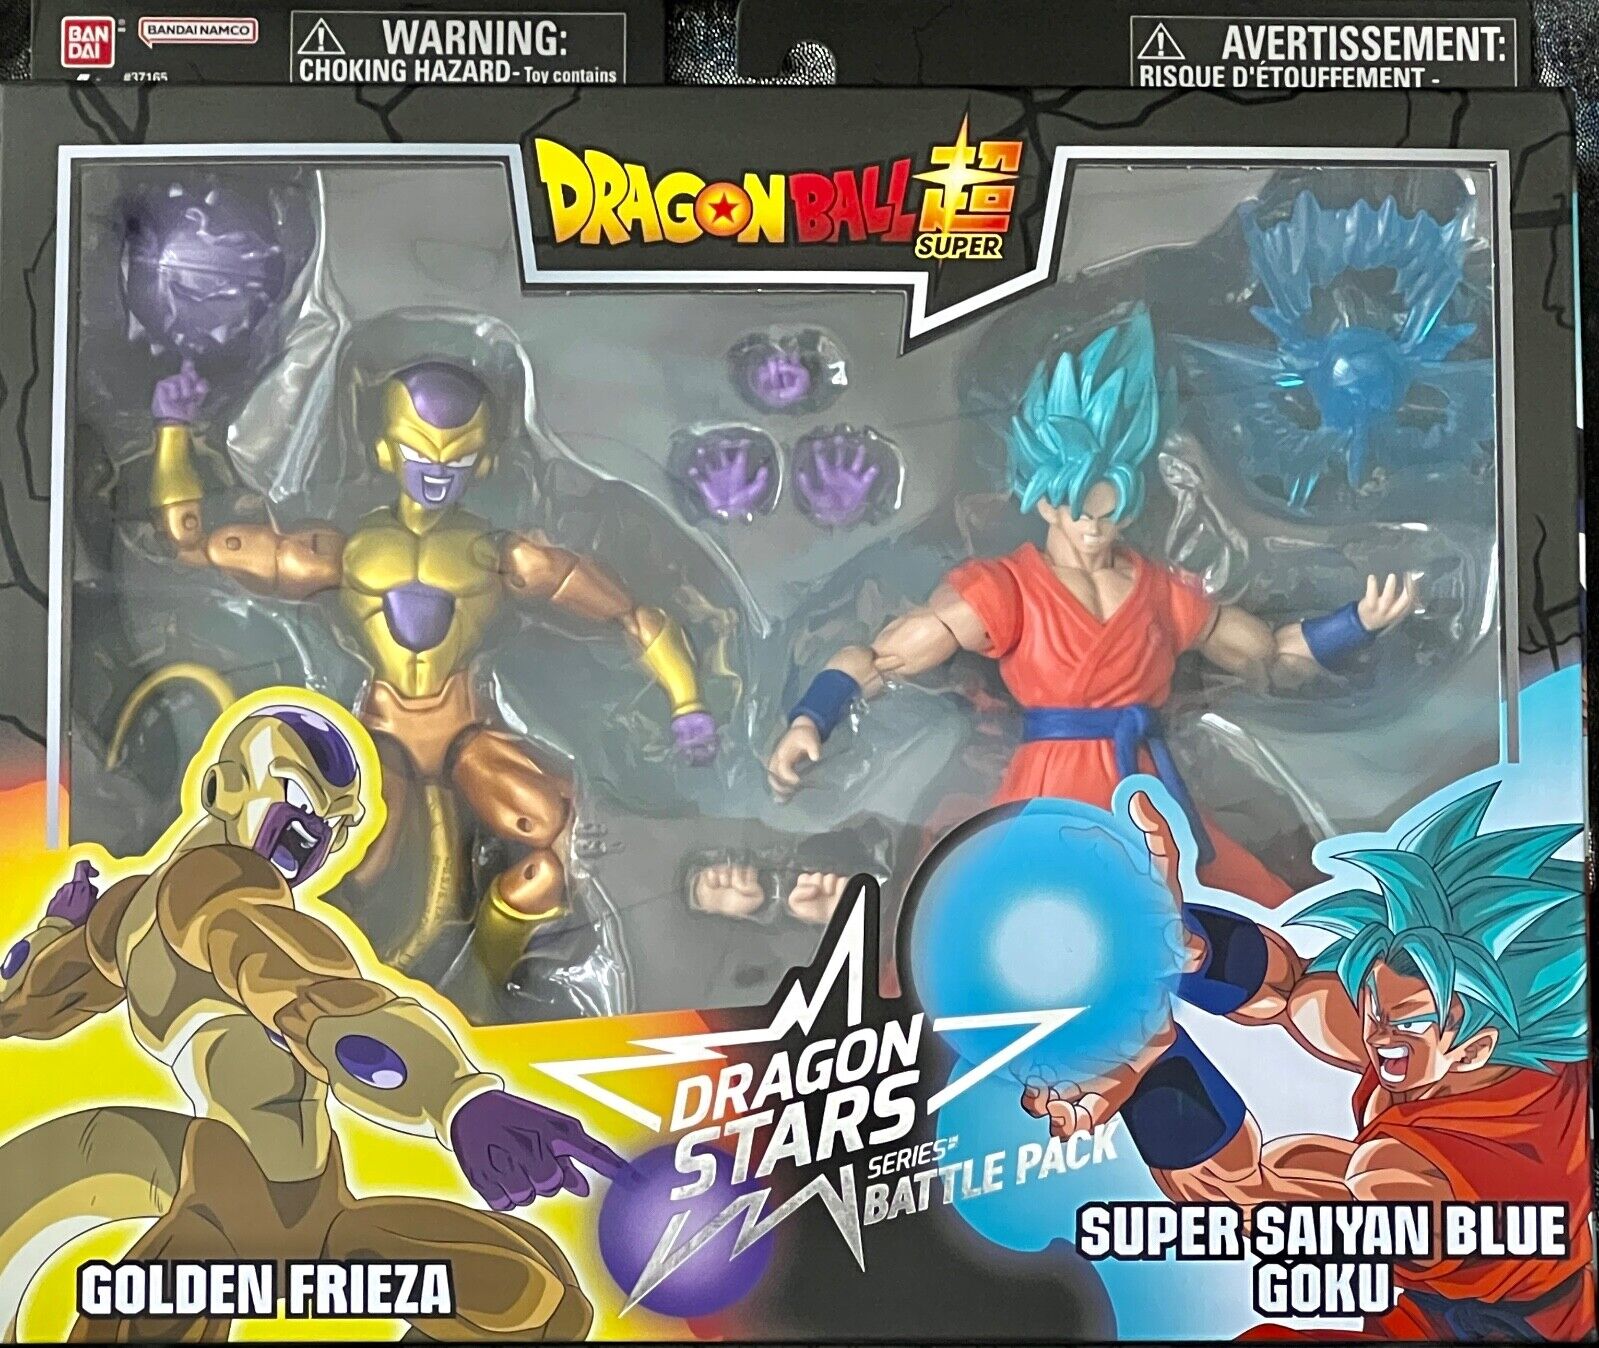 DBZ • Super Dragon Stars • SS Blue Goku vs Golden Frieza Battle Pack• Ships Free